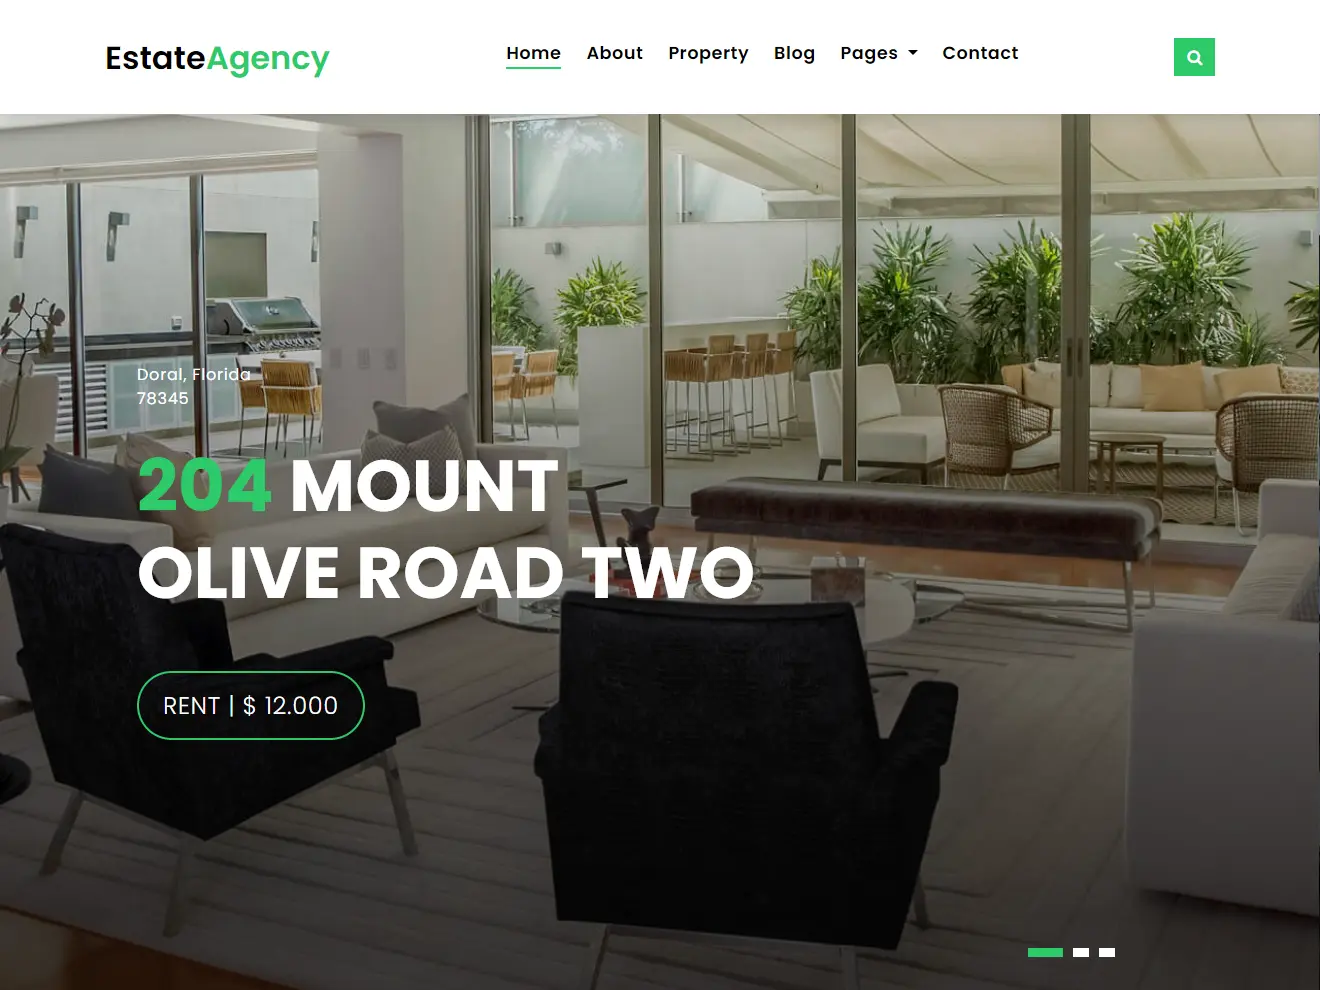 EstateAgency - Bootstrap Real Estate Website Template